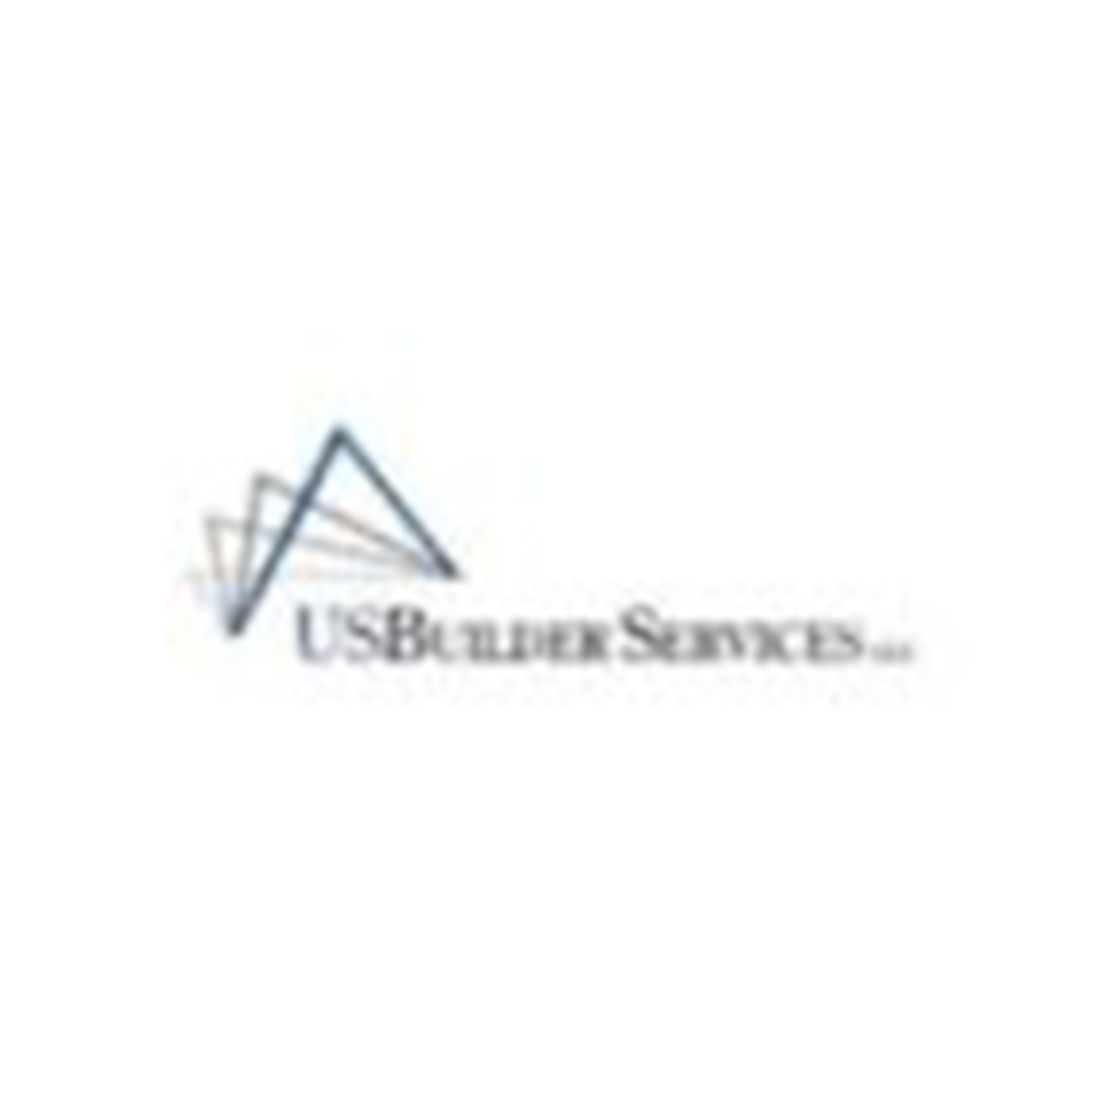 U.S. Builder Services